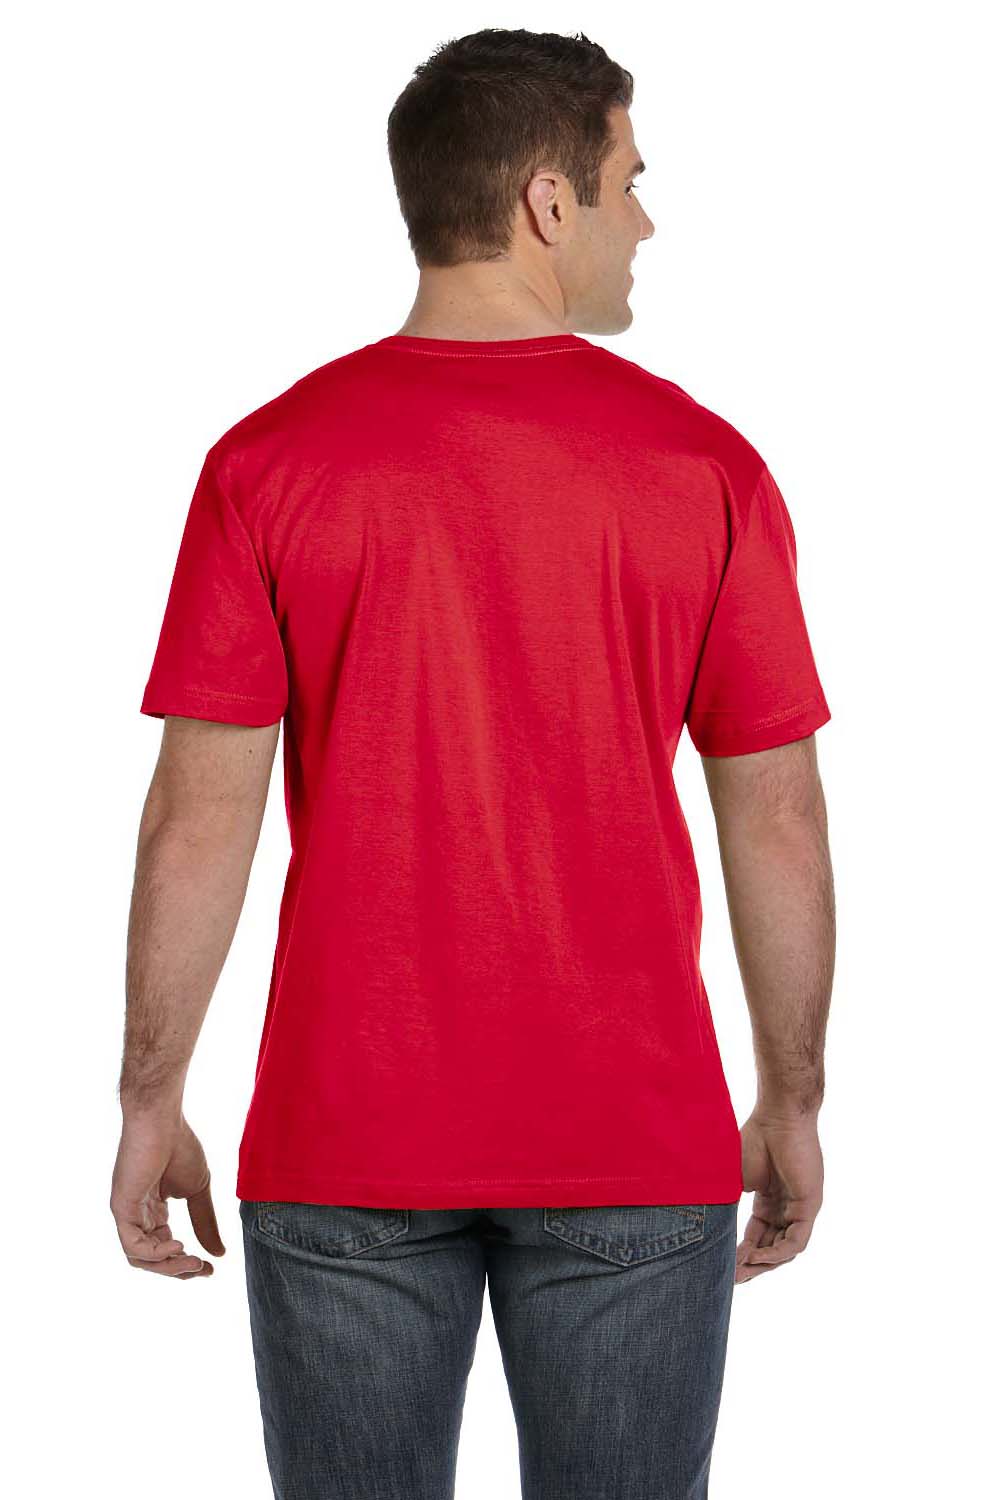 LAT 6901 Mens Fine Jersey Short Sleeve Crewneck T-Shirt Red Back